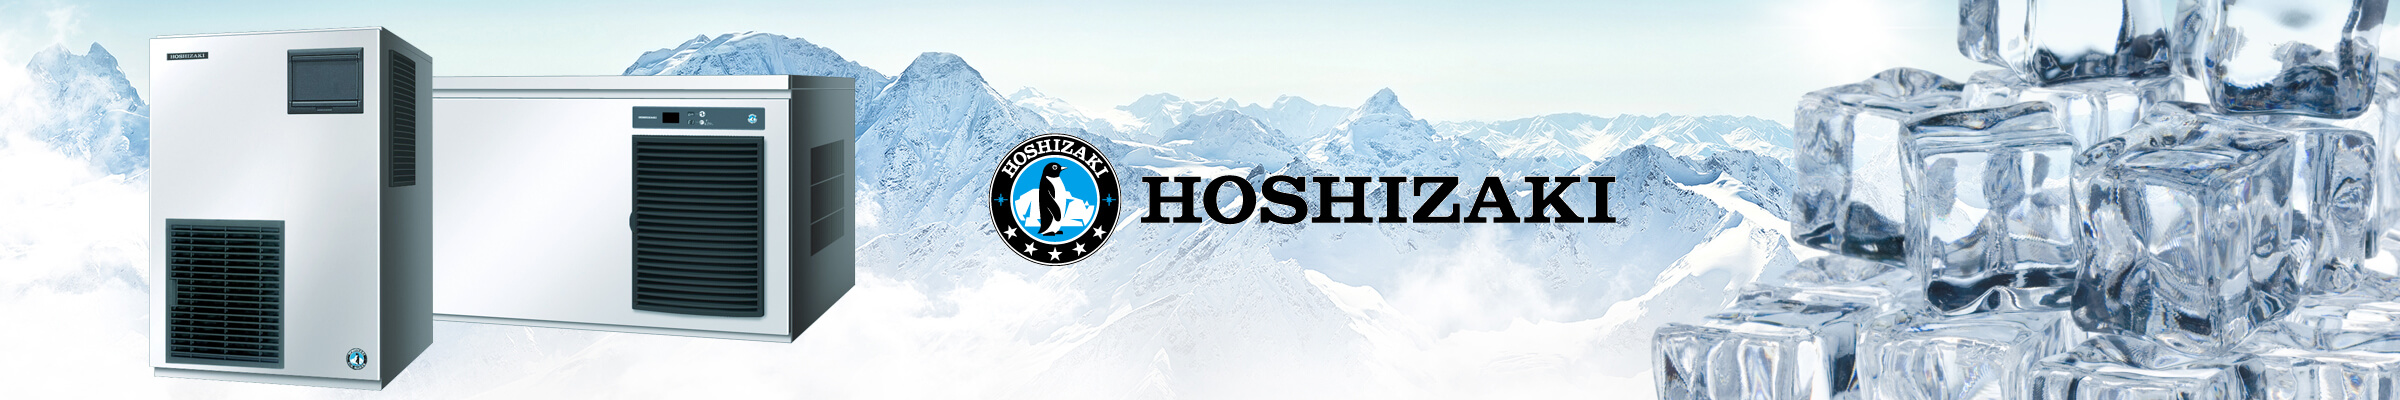 Hoshizaki Online Shop